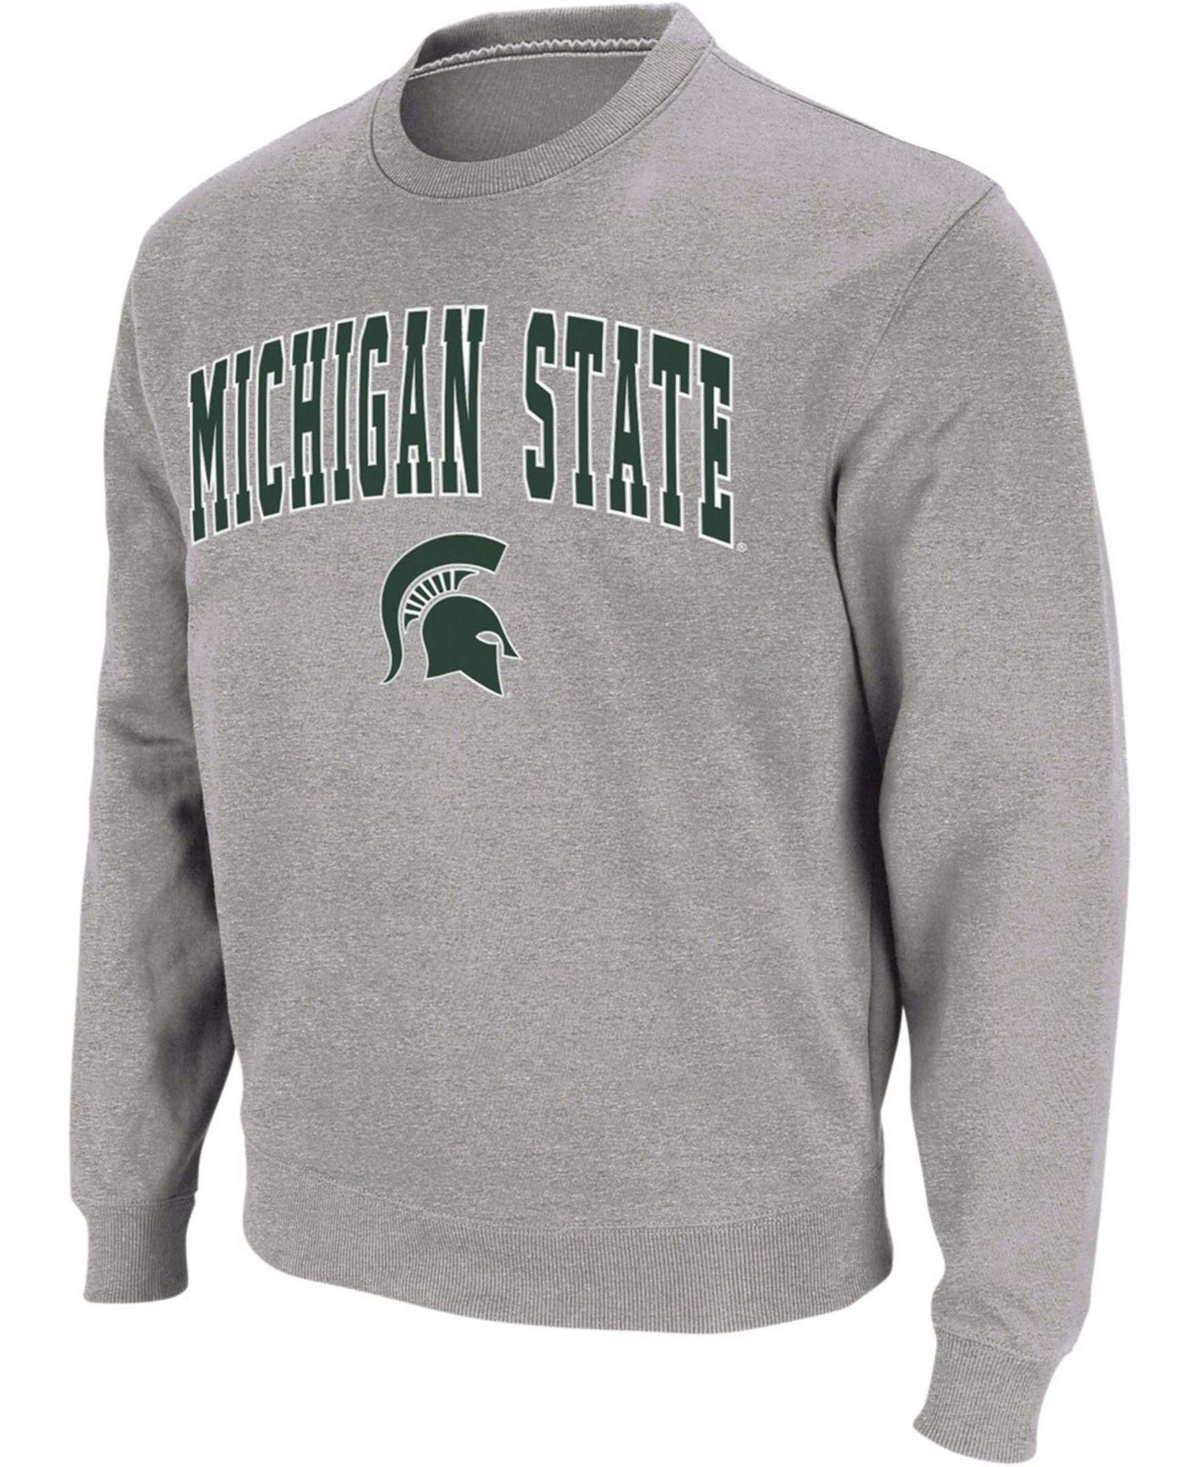 Shop Colosseum Men's Heather Gray Michigan State Spartans Arch Logo Crew Neck Sweatshirt